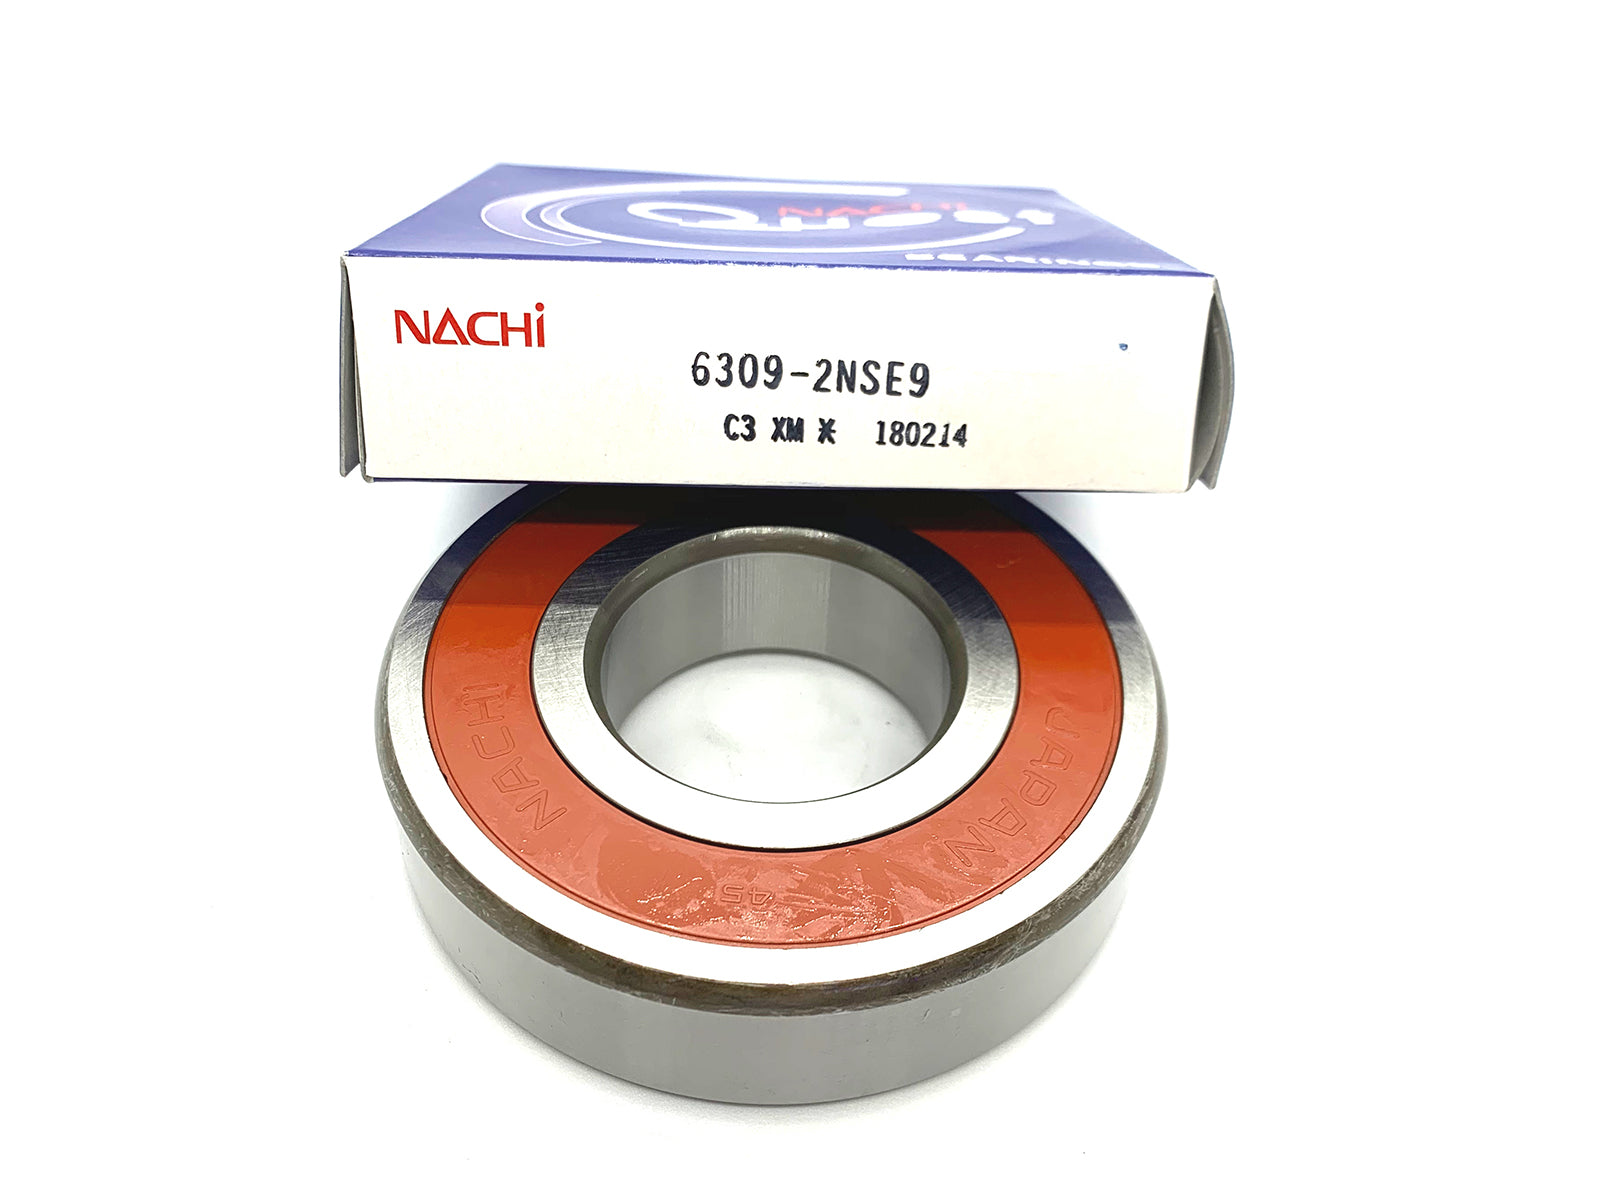 6309-2NSE9 C3 Nachi Ball Bearing - ppdistributors